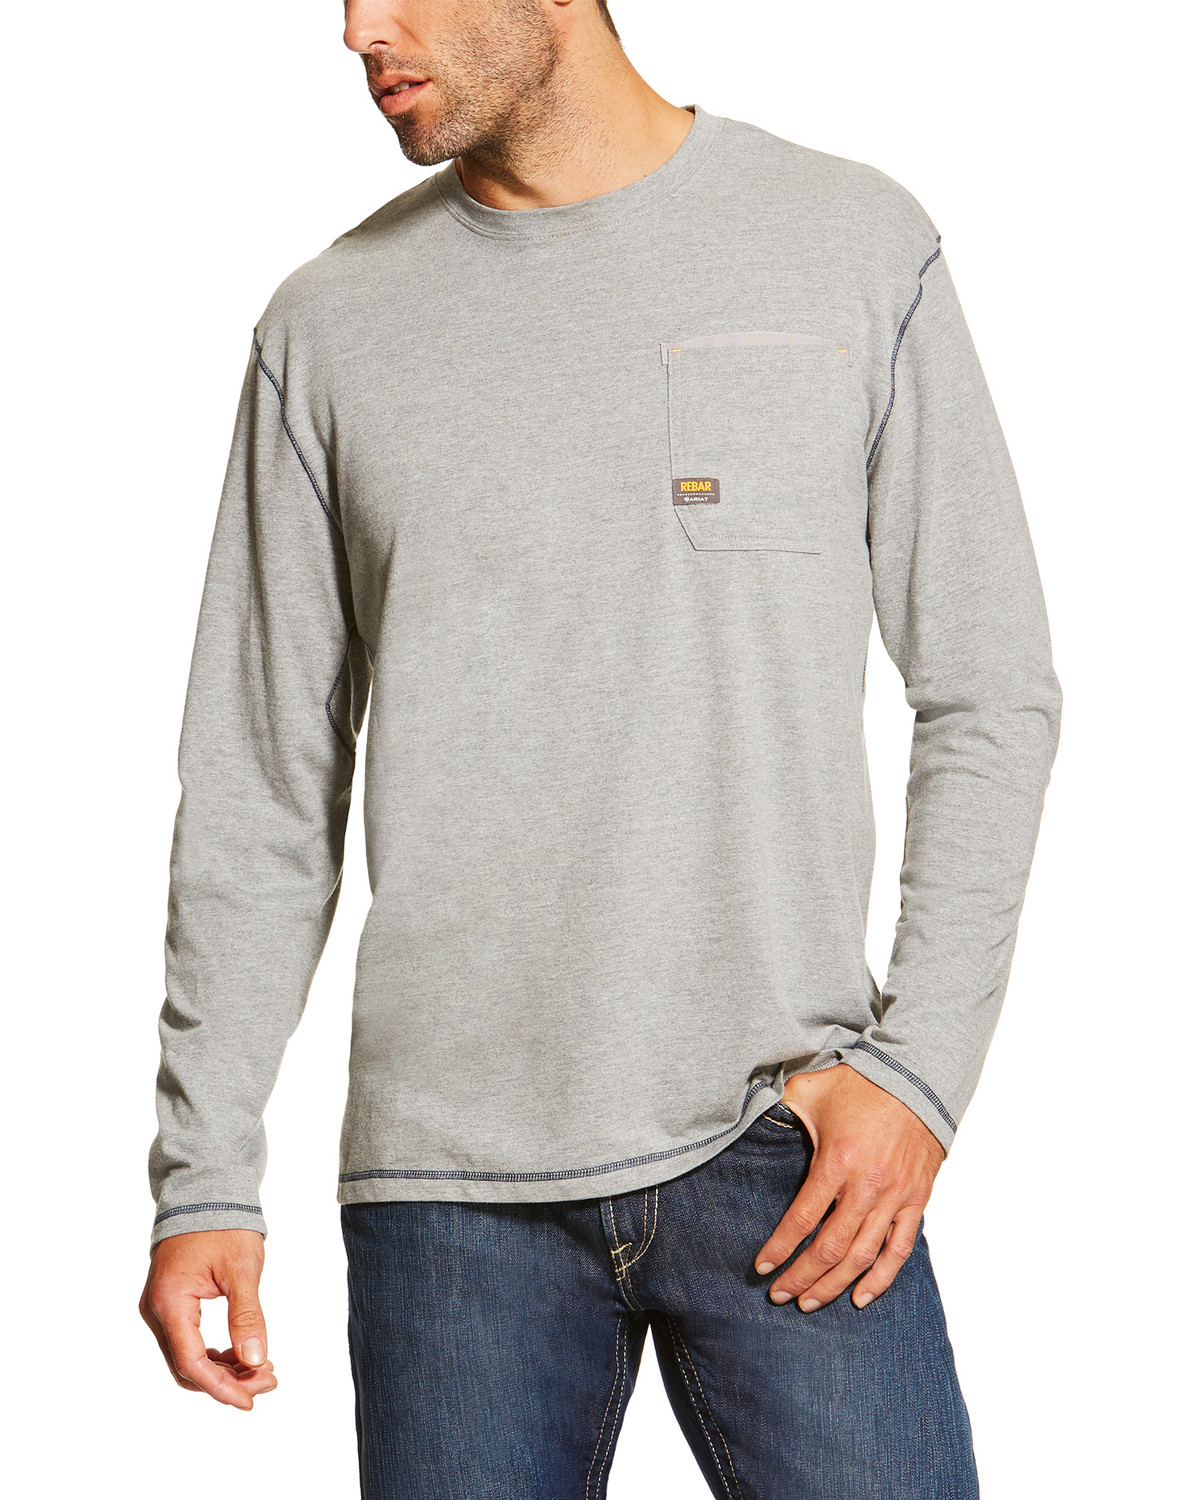 Ariat Men's Rebar Long Sleeve Pocket T-Shirt- Big